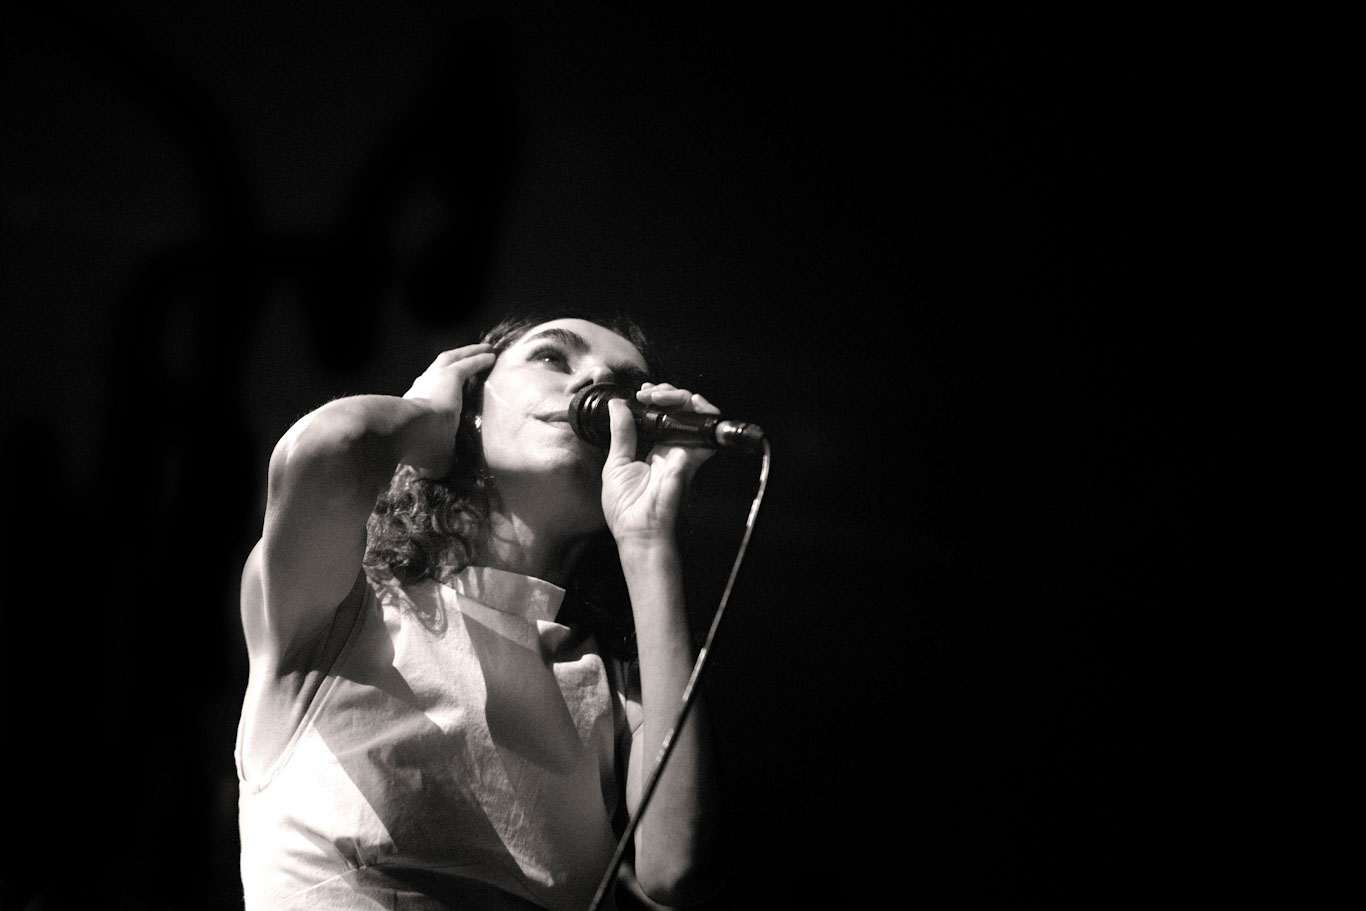 LIVE REVIEW: PJ Harvey at Camden Roundhouse Credit: Hels Millington